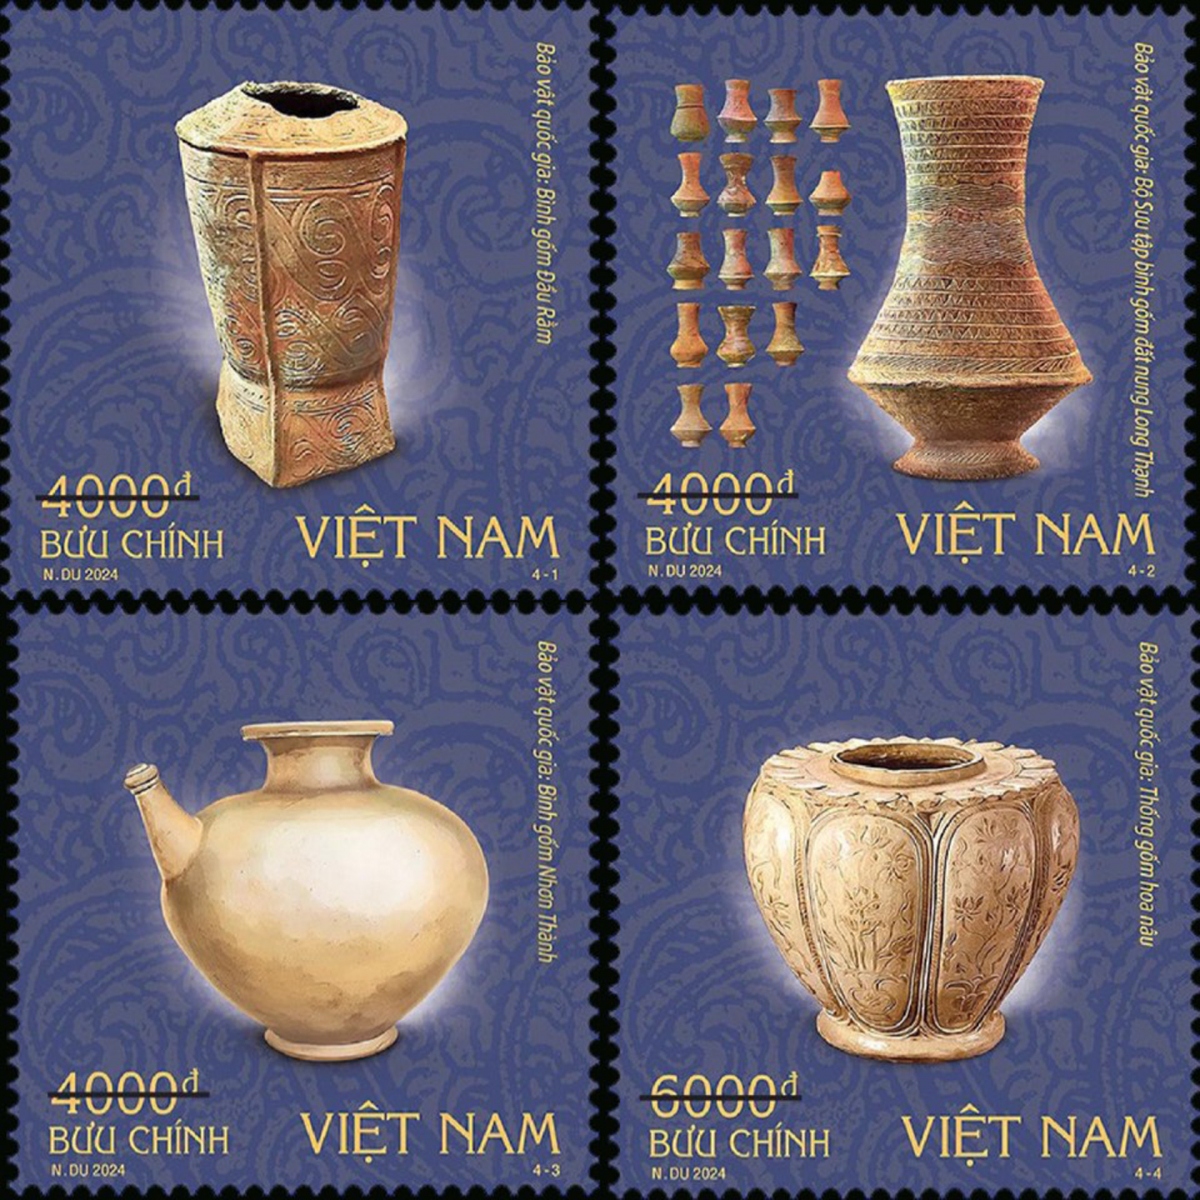 vietnam releases stamp series highlighting ceramic national treasures picture 1